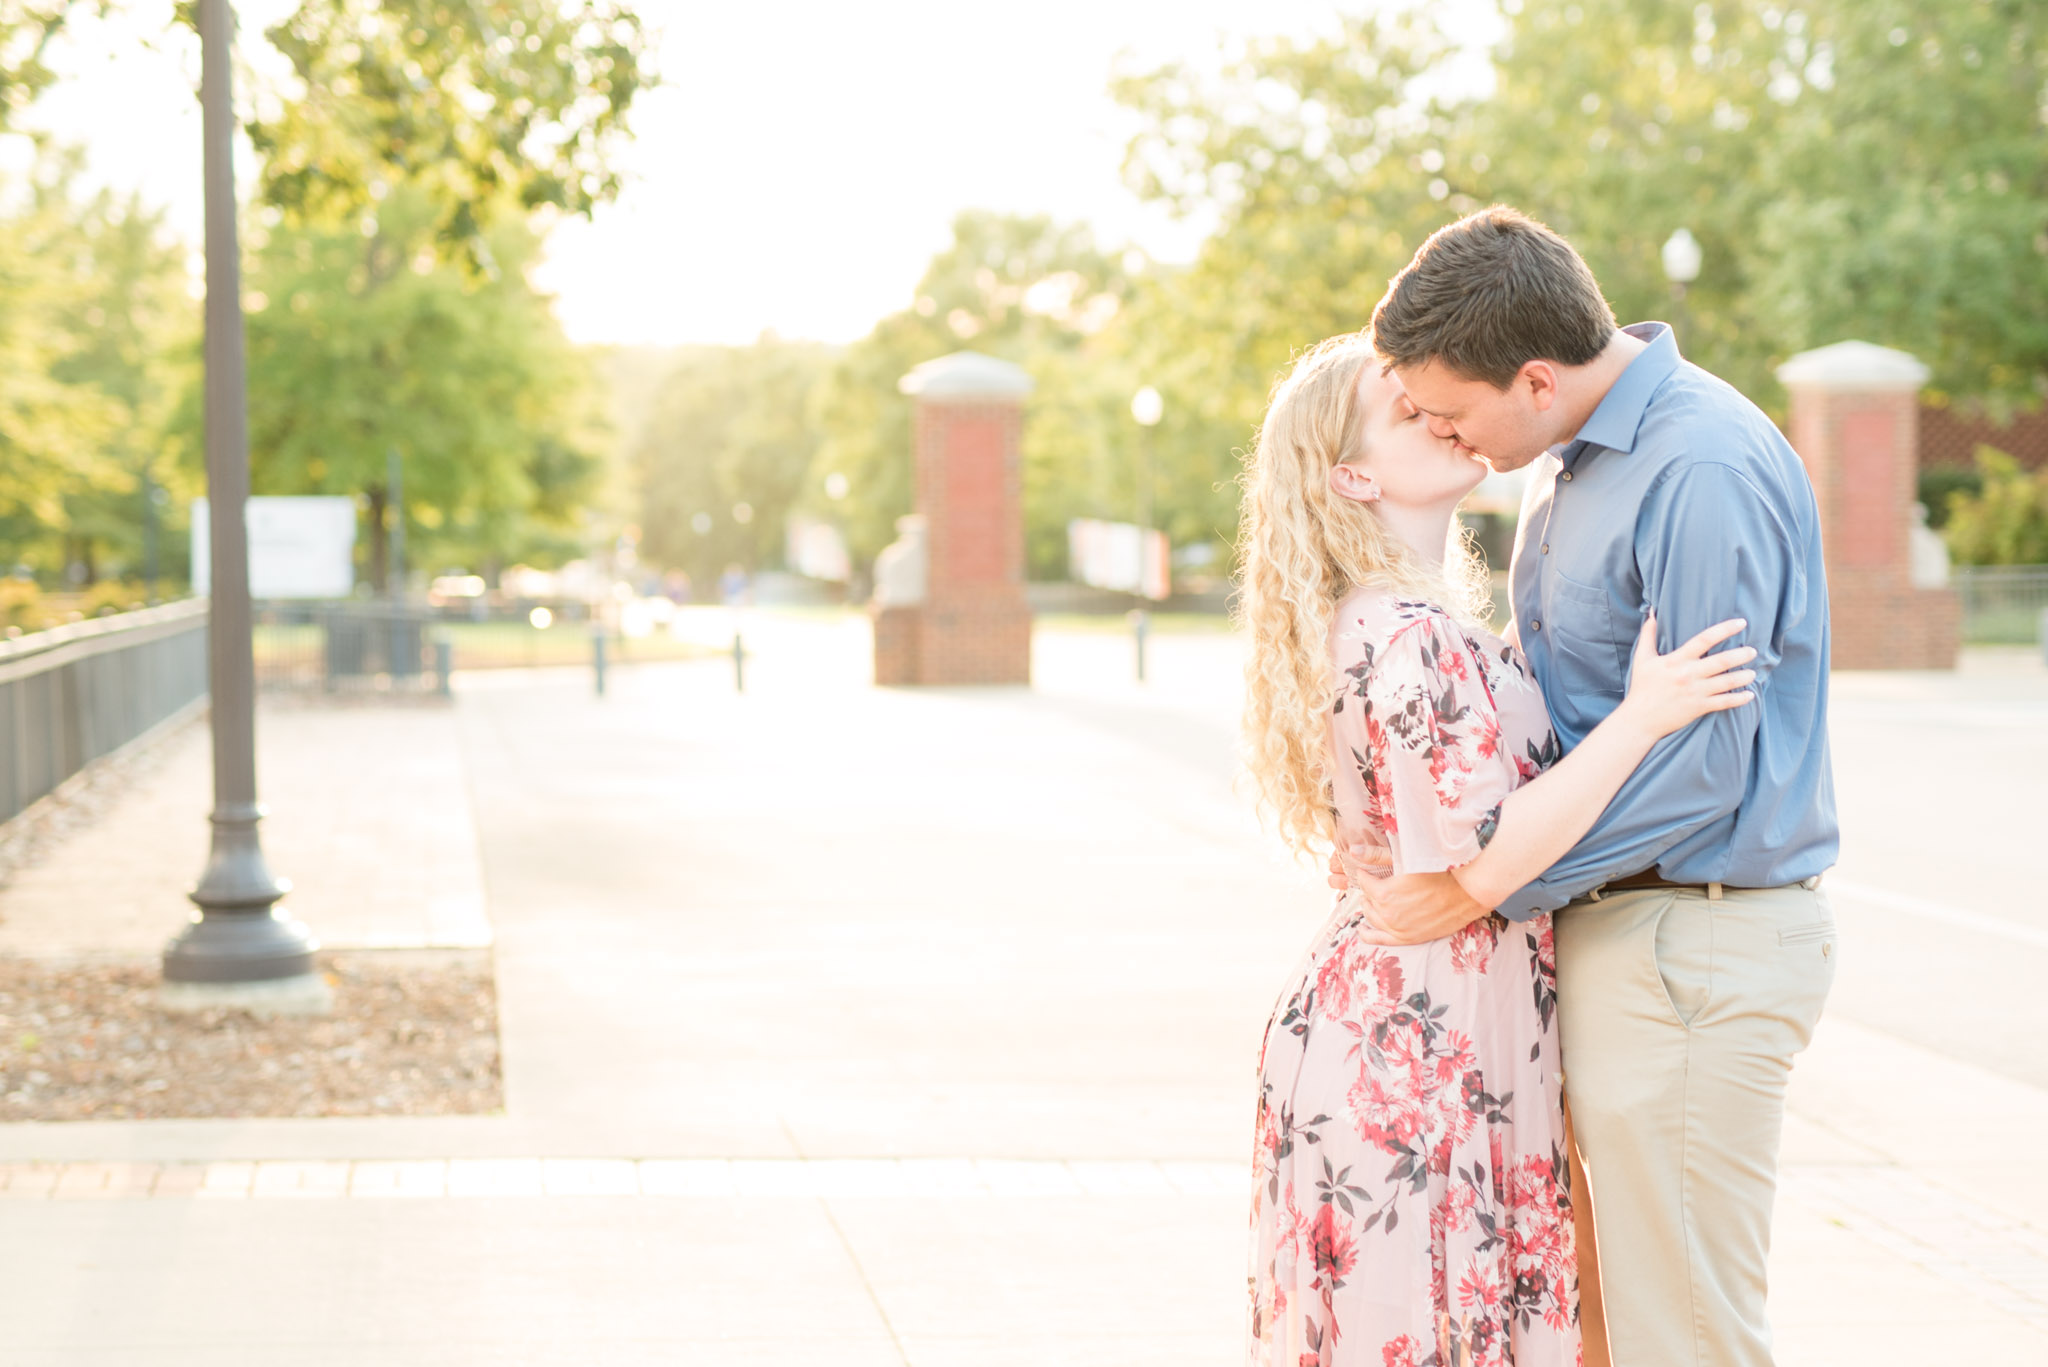 Couple kisses at Auburn University at sunset.